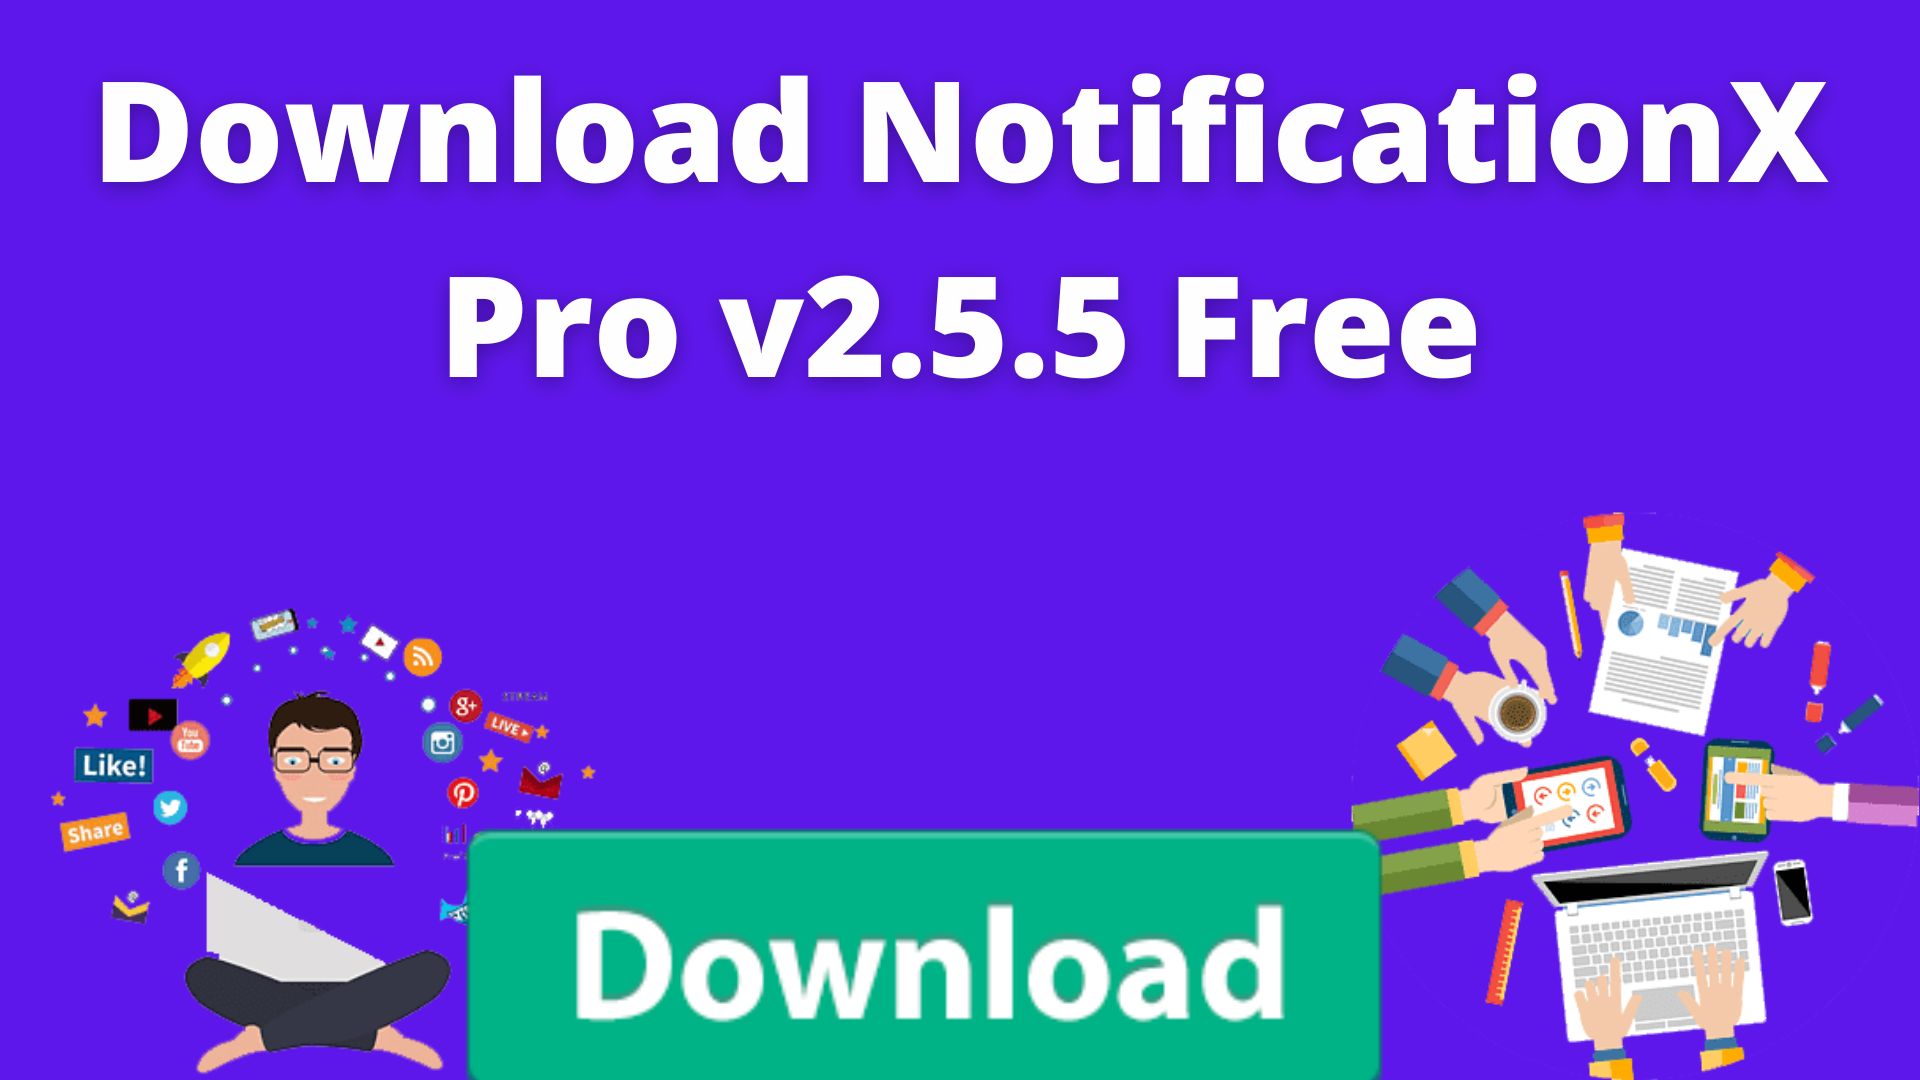 Download Notificationx Pro V2.5.5 Free